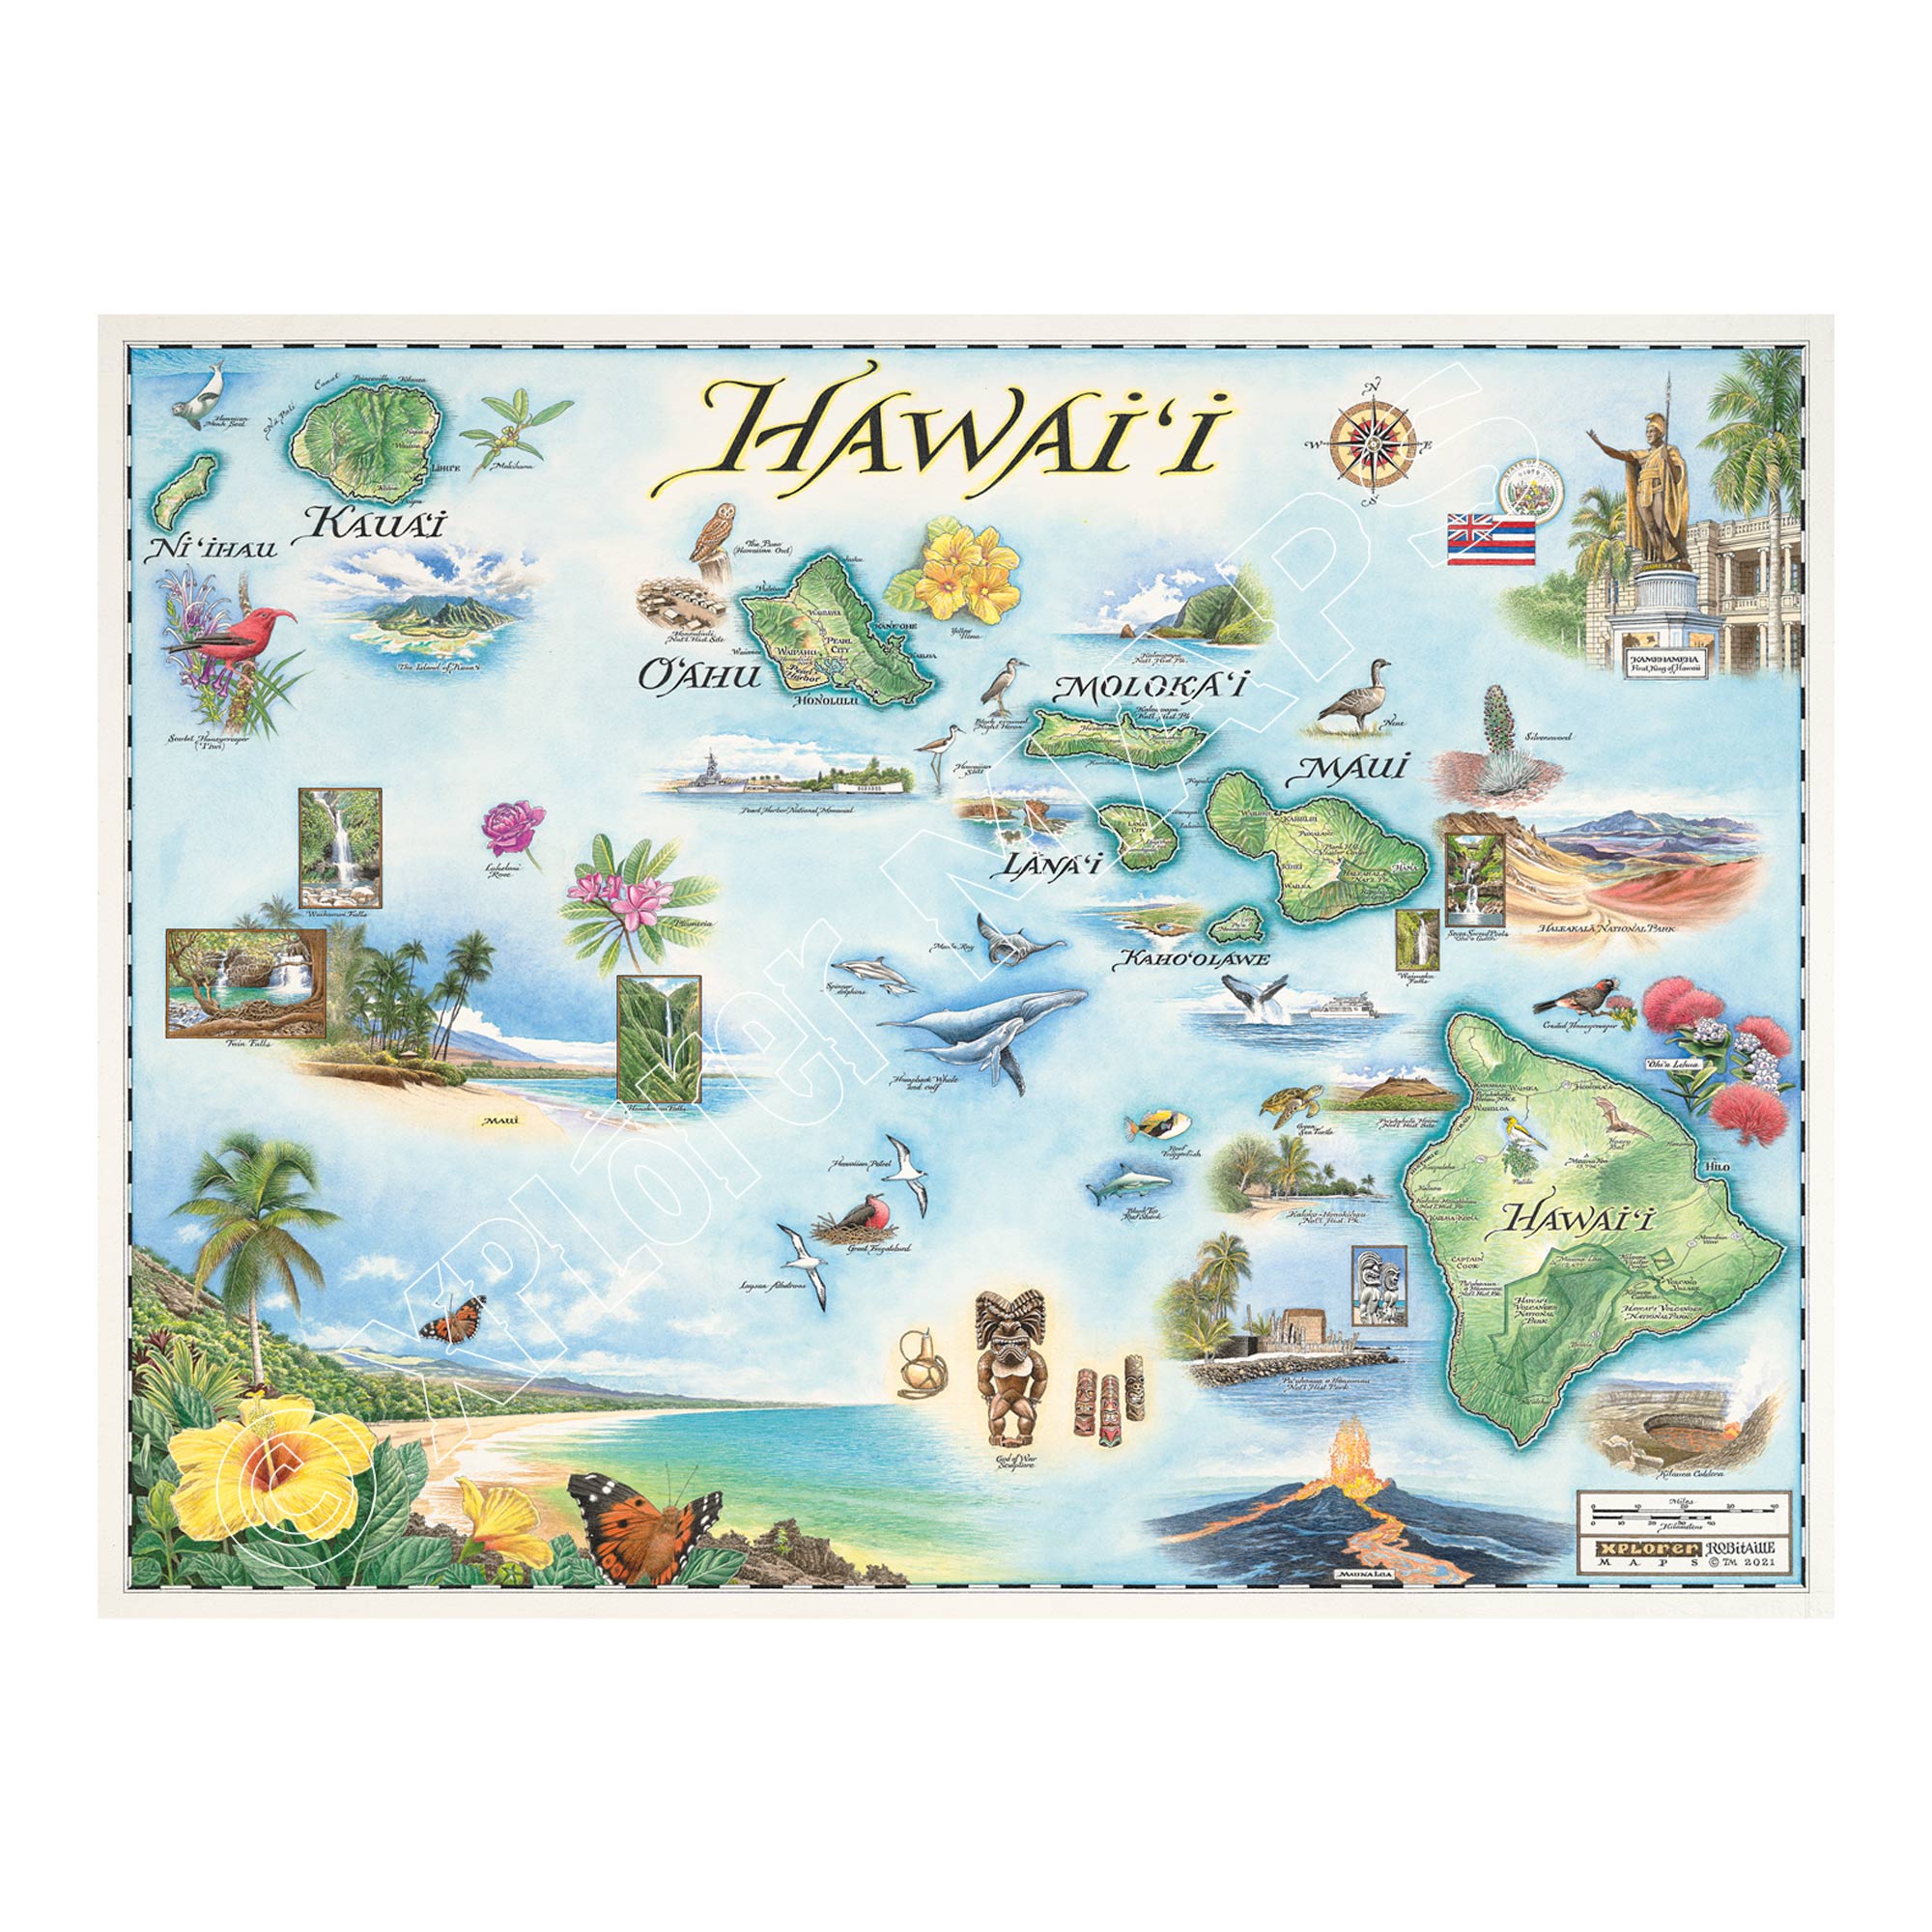 Hawaii state hand-drawn map in earth tones blue and green. The map features the islands of Hawaii, Maui, Kaho'olawe, Lanai, Molokai, Oahu, Kauai, and Ni'ihau. Flora and fauna of islands include, the Scarlet Honeycreeper, Lokelani Rose, and green sea turtles. Other illustrations include statue of King Kamehameha, Pearl Harbor National Memorial, and Mauna Loa erupting. Measures 24x18.